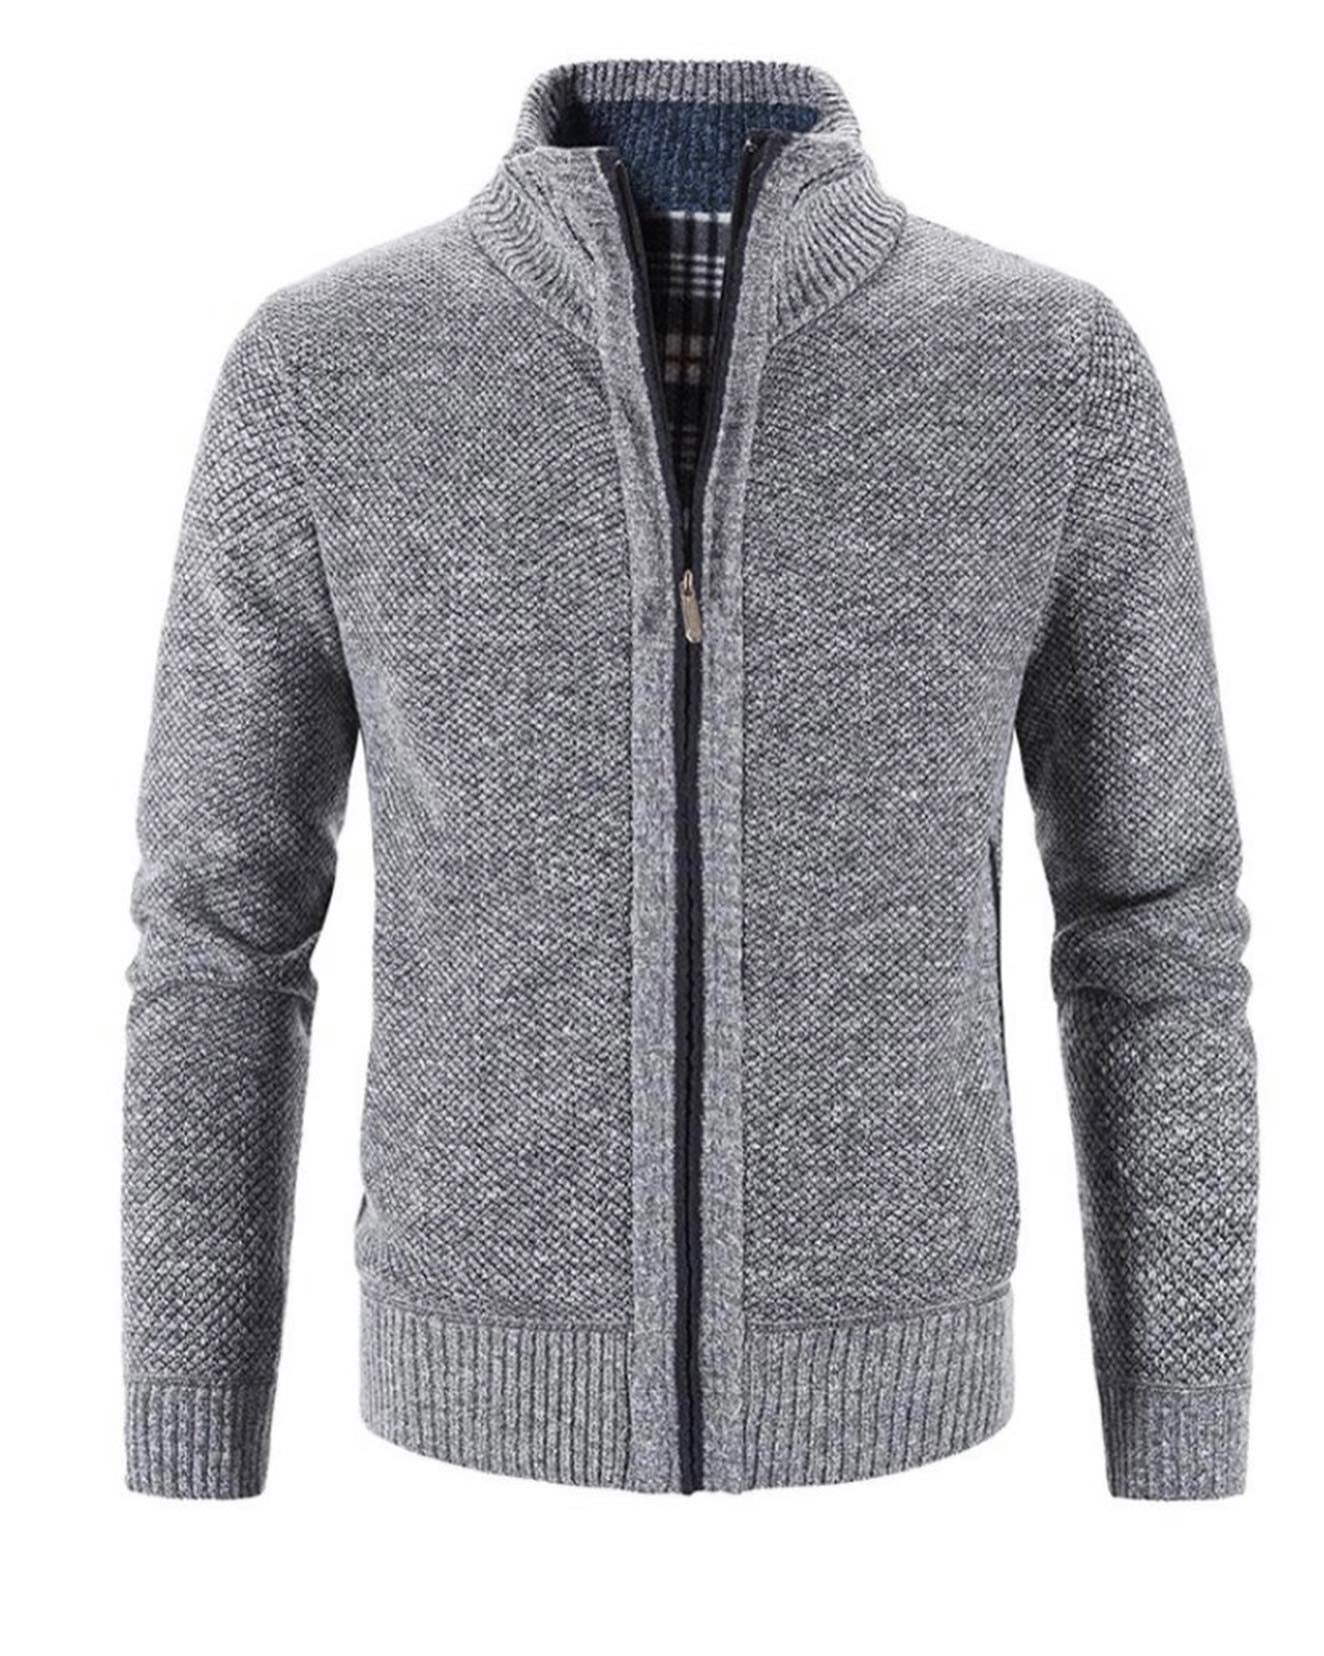 Men’s classy zipper sweater